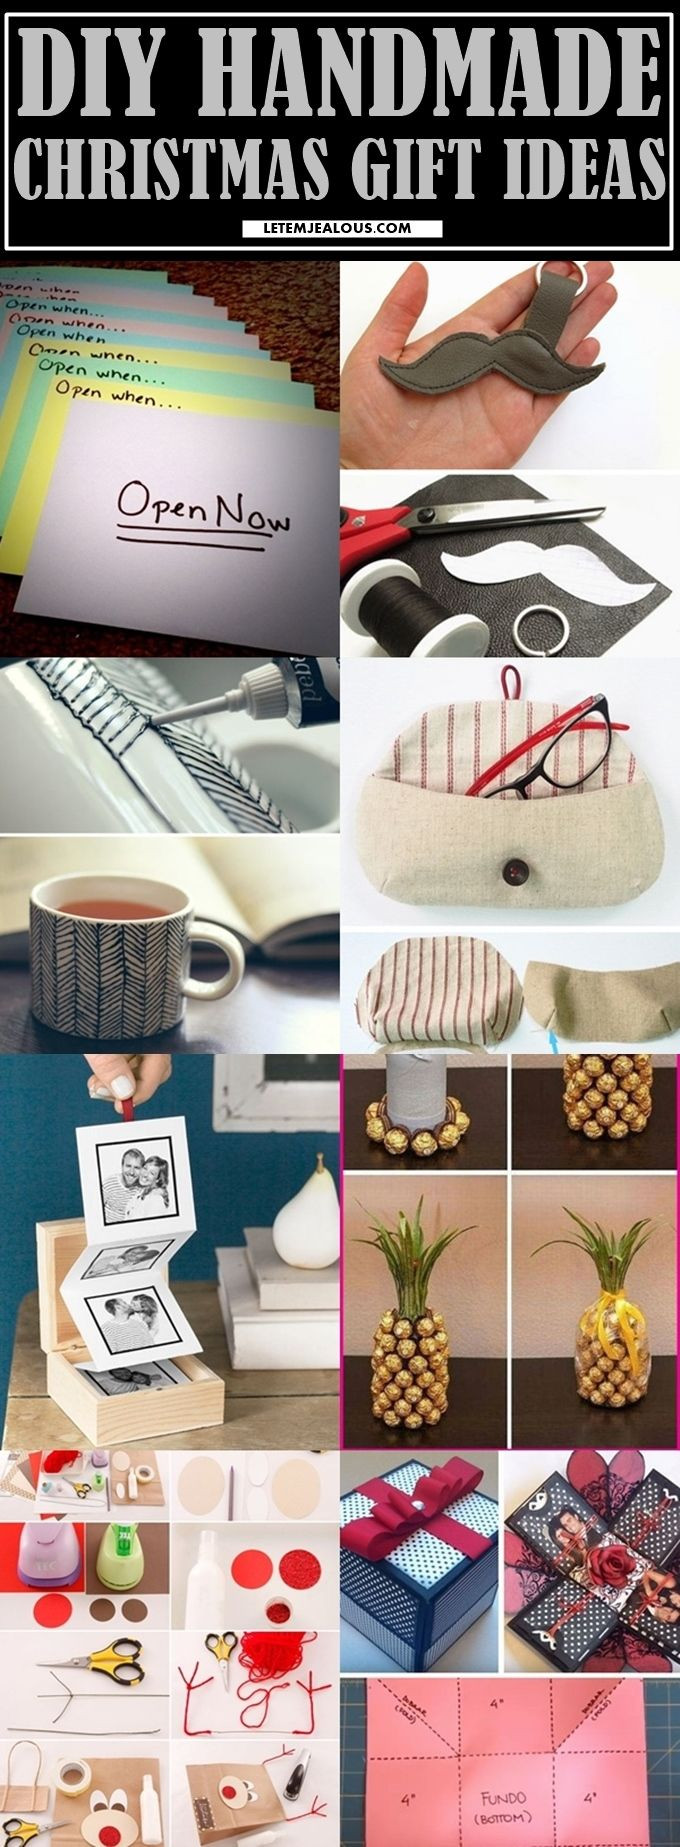 Handmade Gift Ideas For Boyfriend
 40 DIY Handmade Christmas Gift Ideas for your Boyfriend